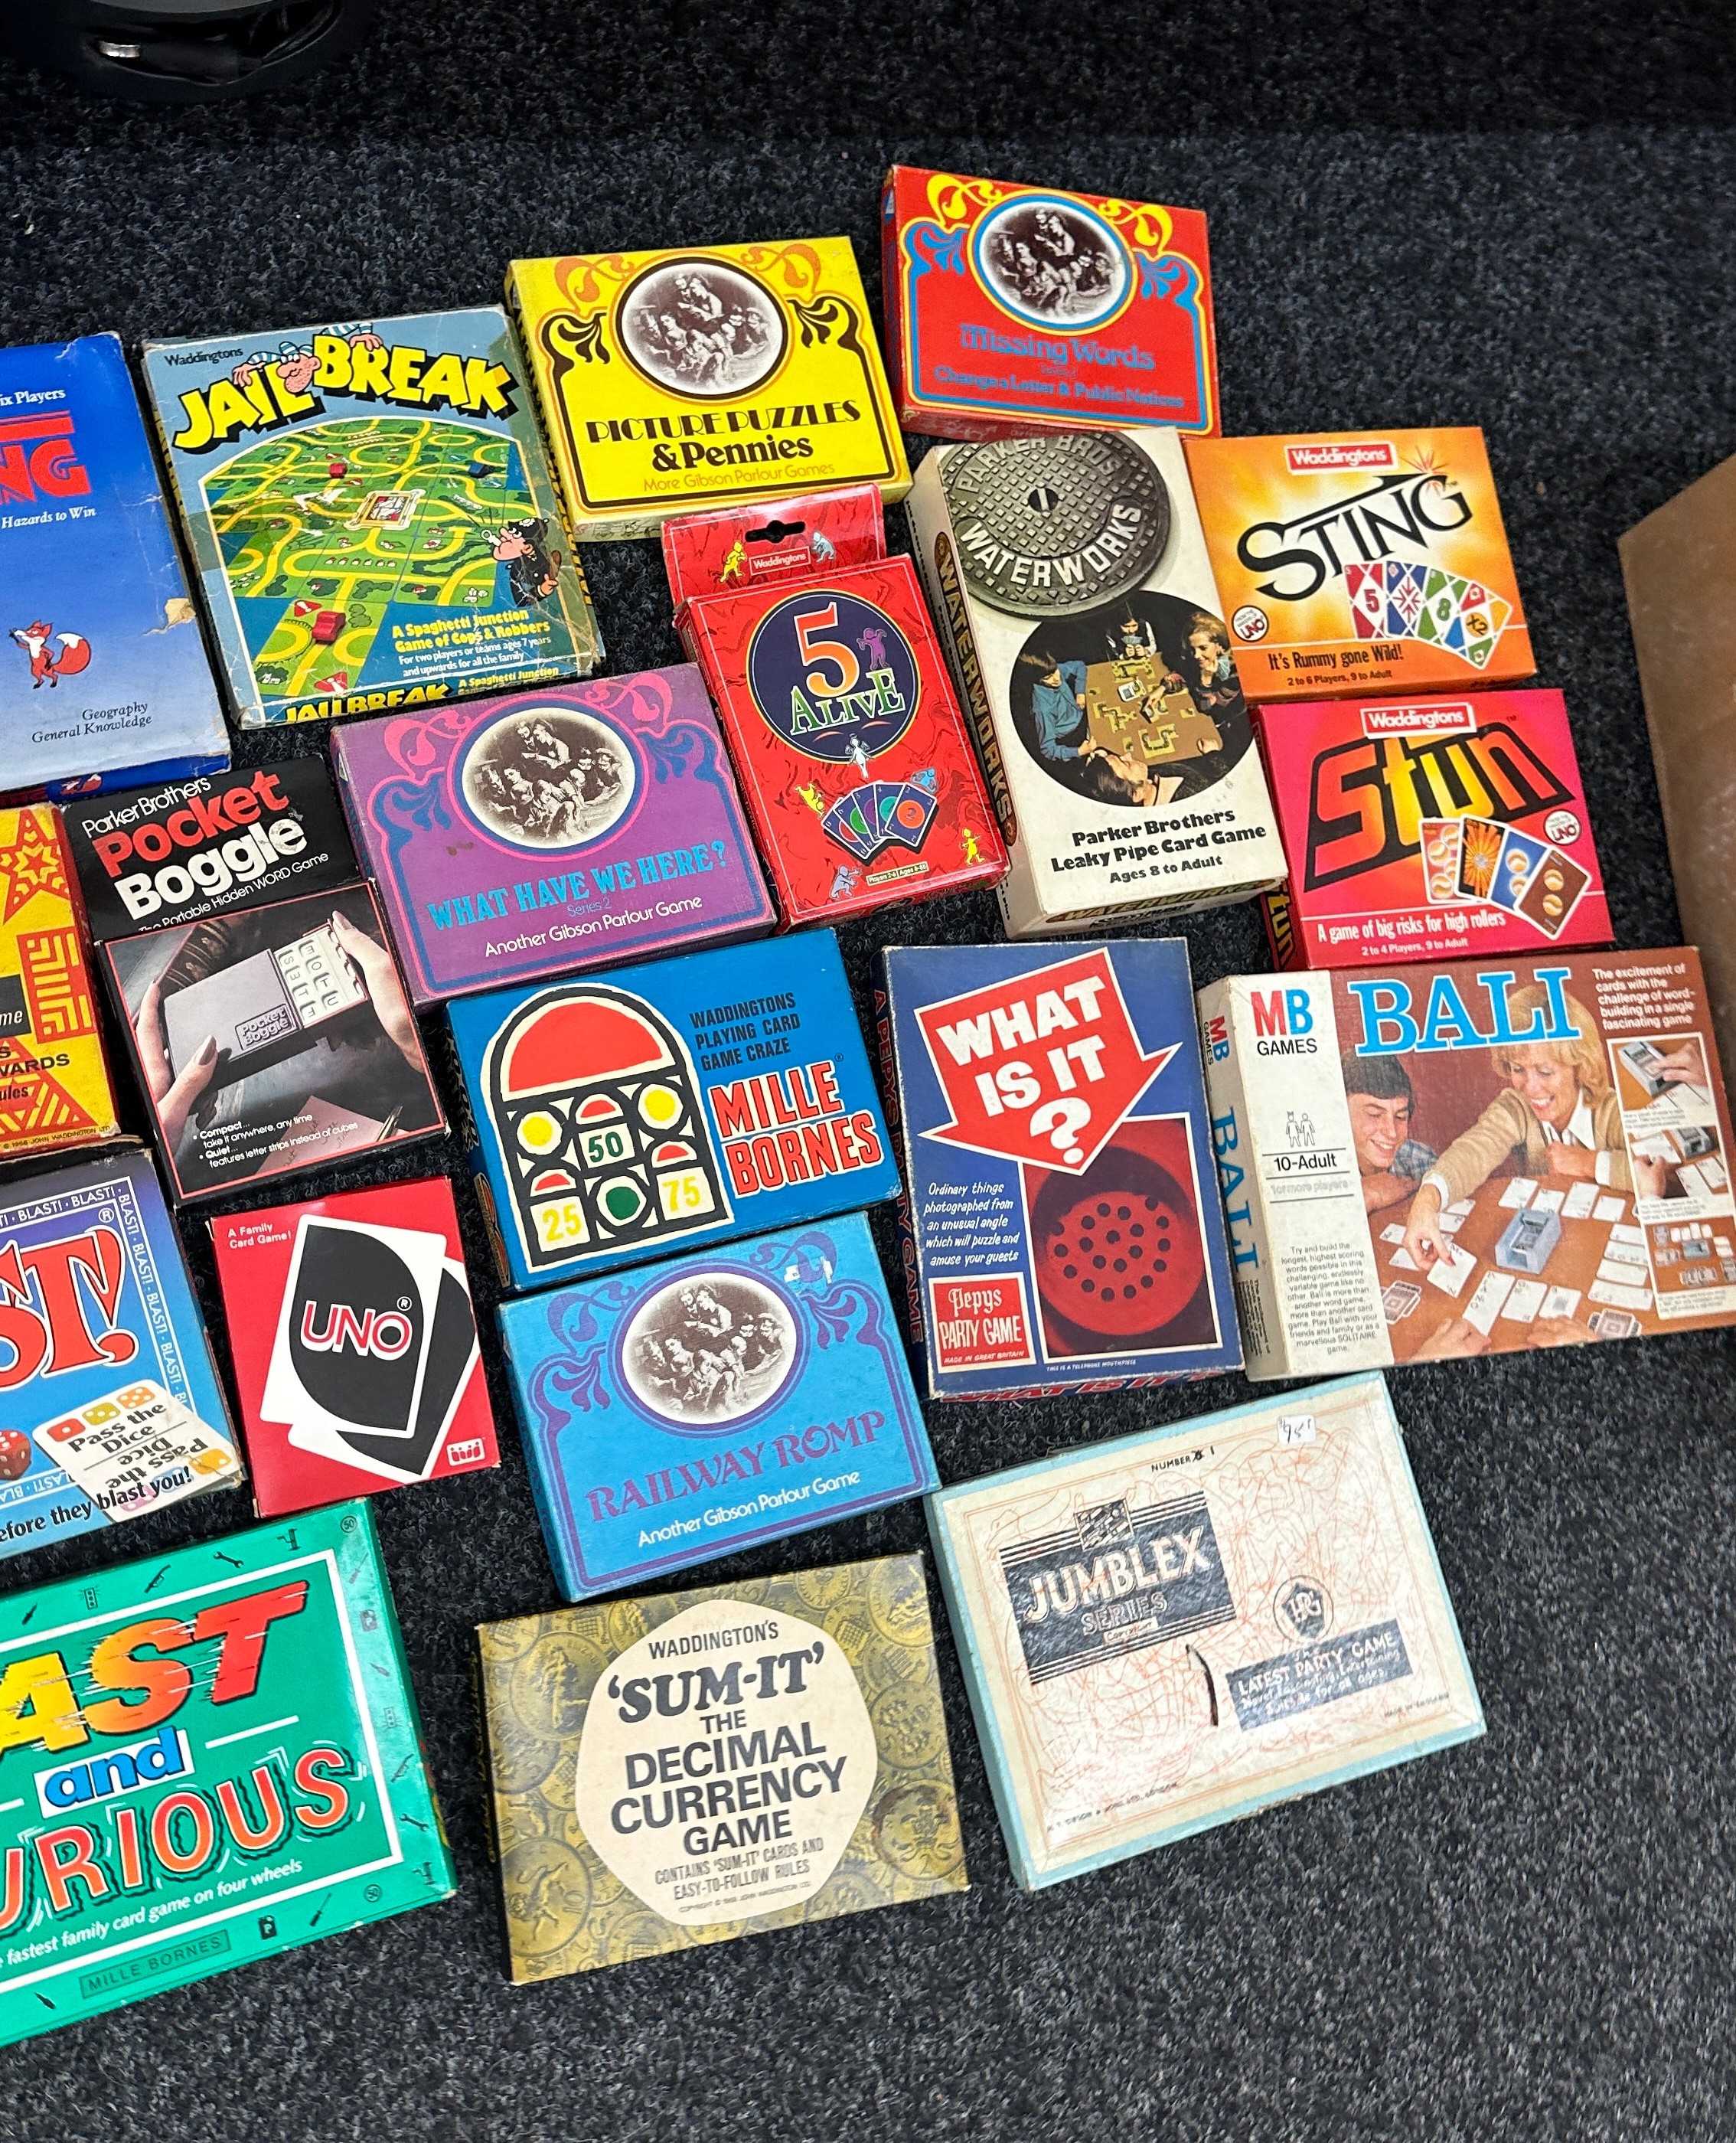 32 vintage indoor parlour board games, chad valley, pepys etc - Image 4 of 4